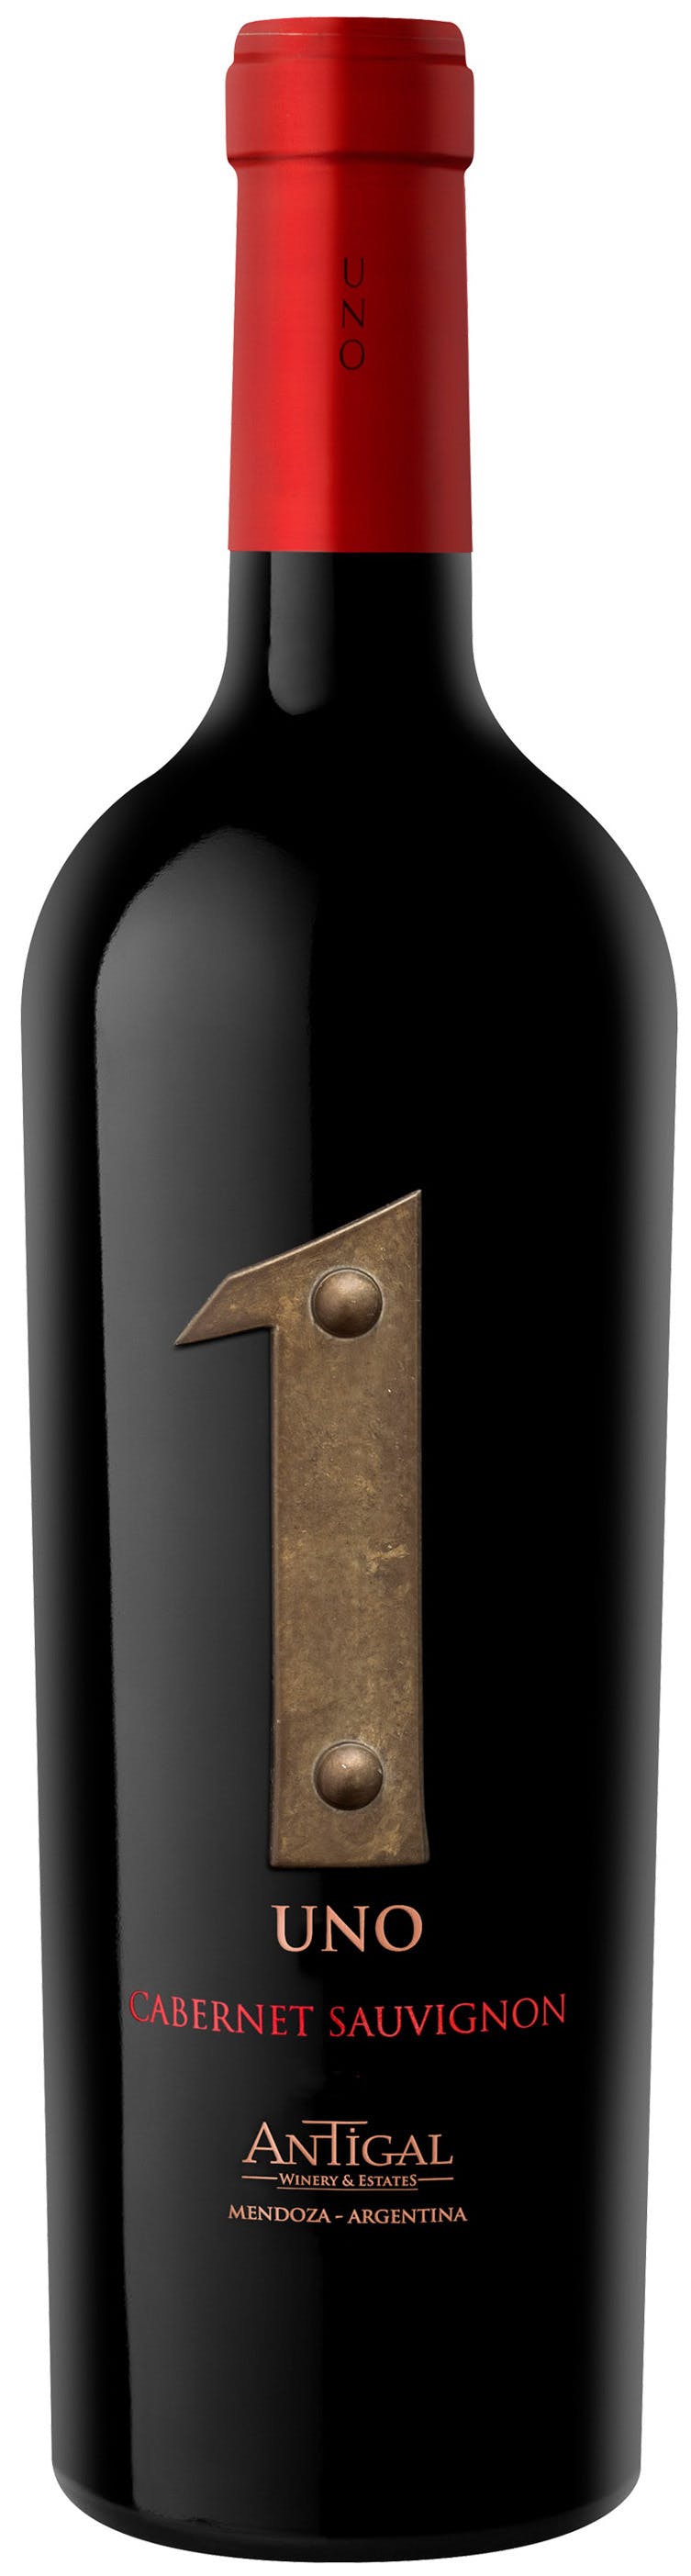 Vinho Argentino Cabernet Sauvignon Buenardo 750ml Mambo